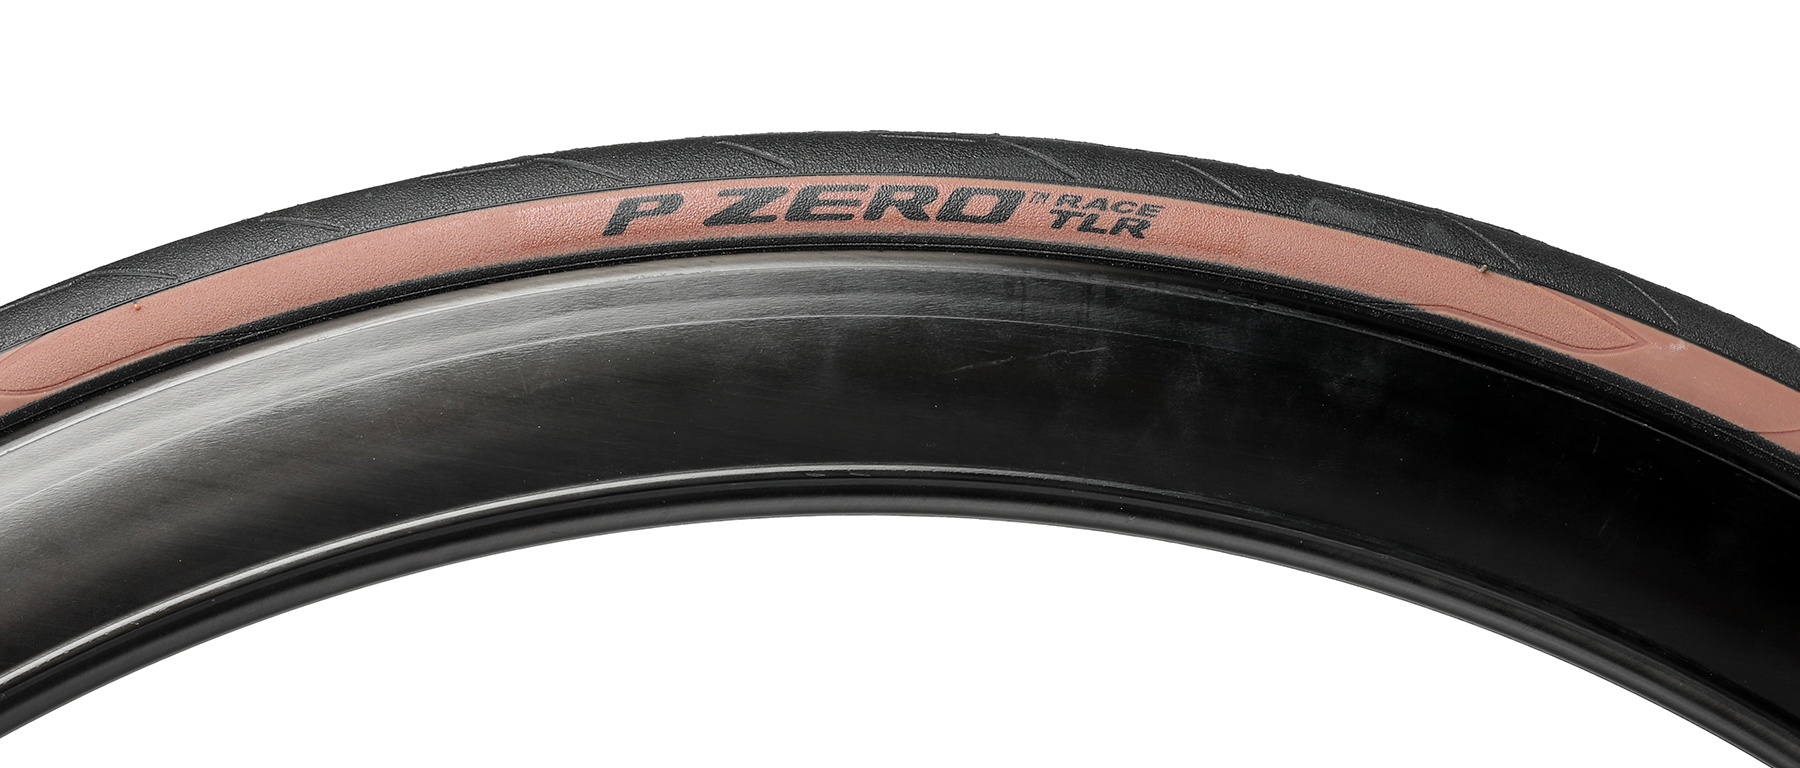 Pirelli P Zero Race TLR Tubeless Tire